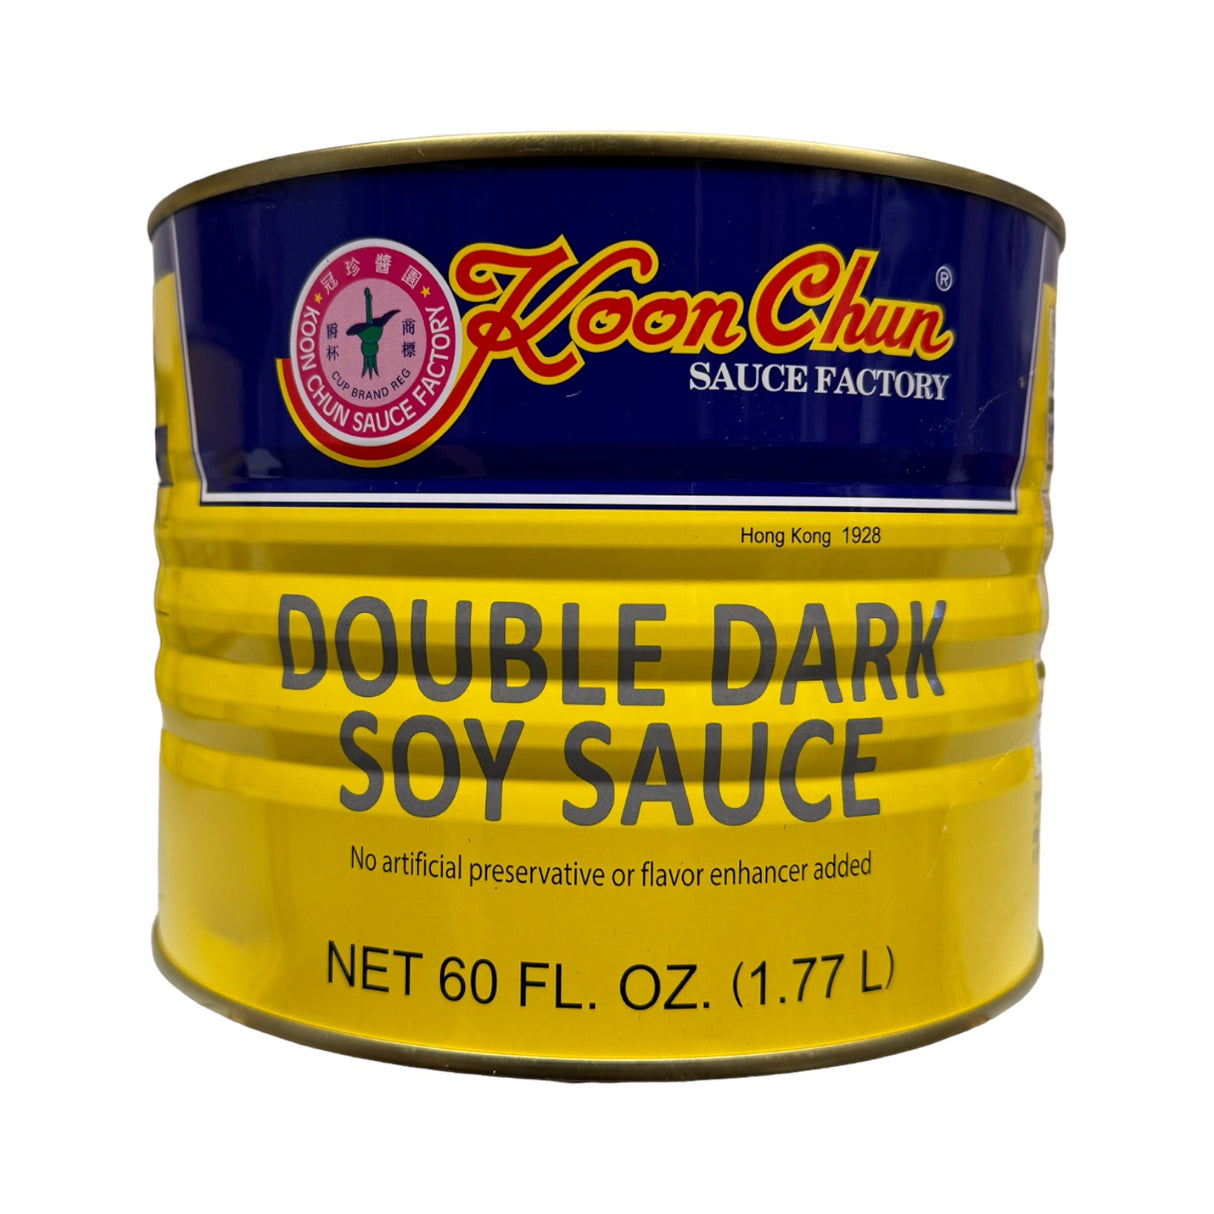 Koon Chun Double Black Soy Sauce